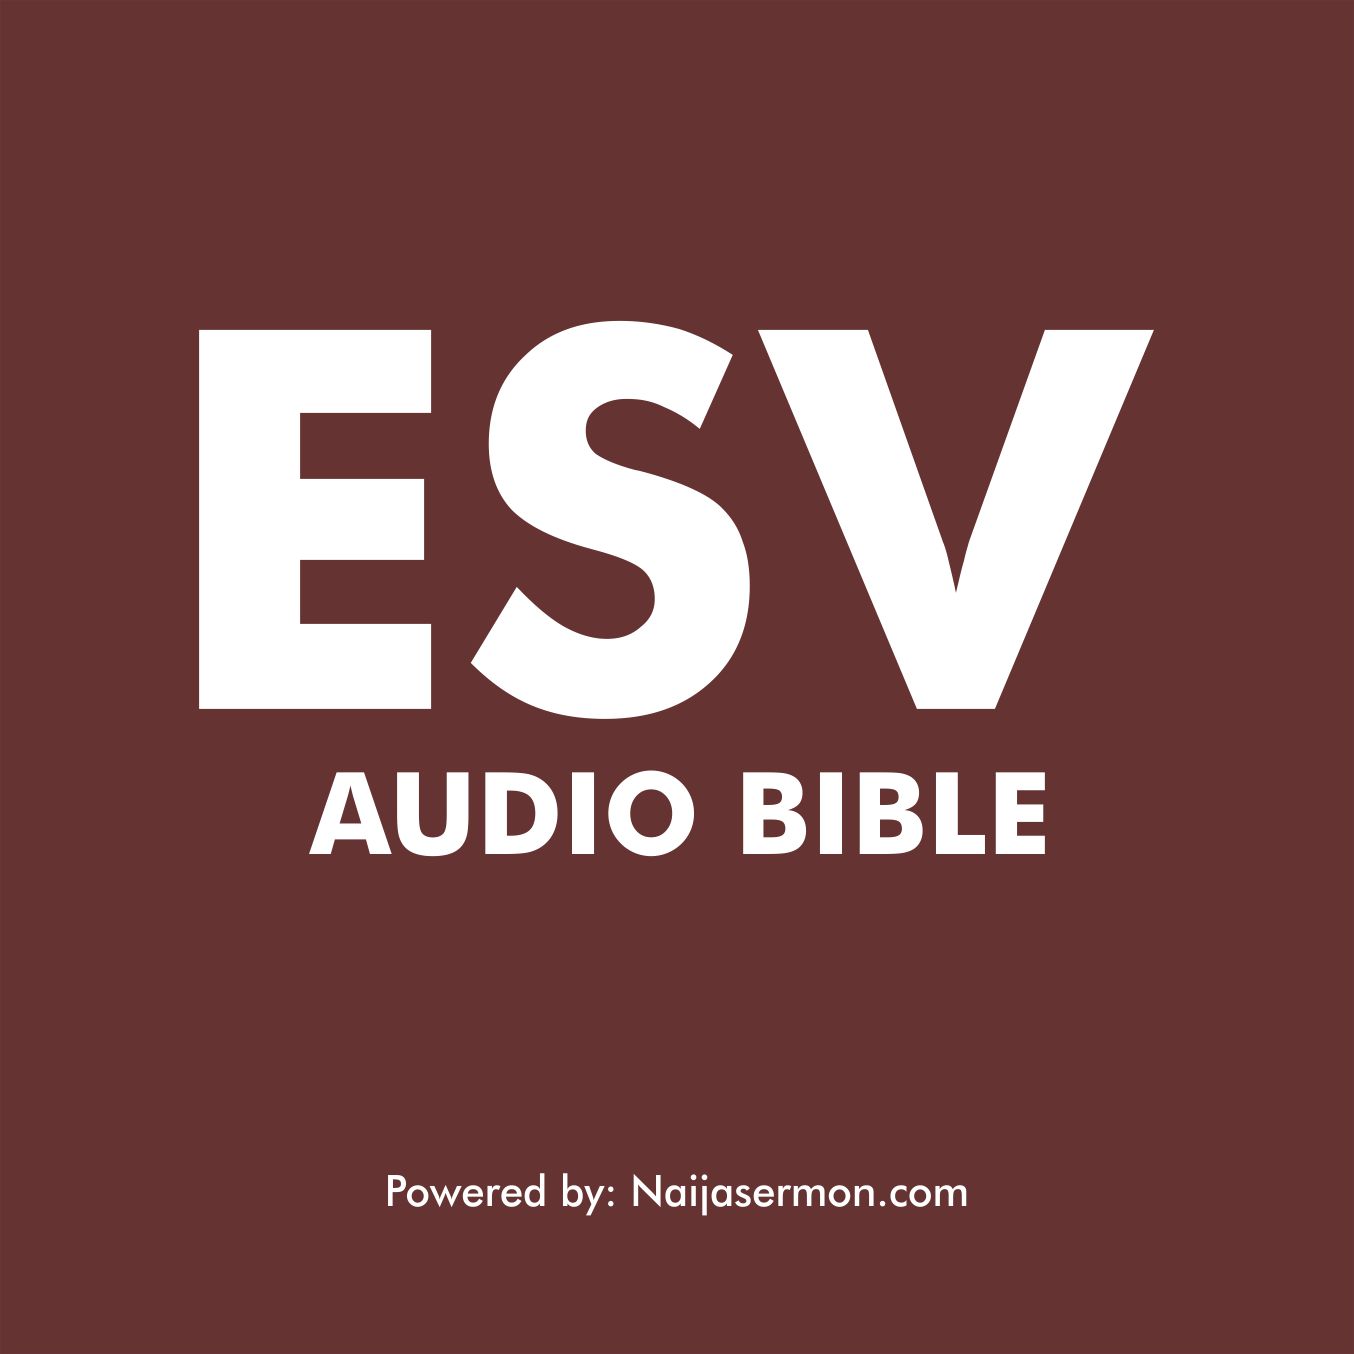 [Free] Download English Standard Version (ESV) Audio Bible MP3 - Dramatized 19